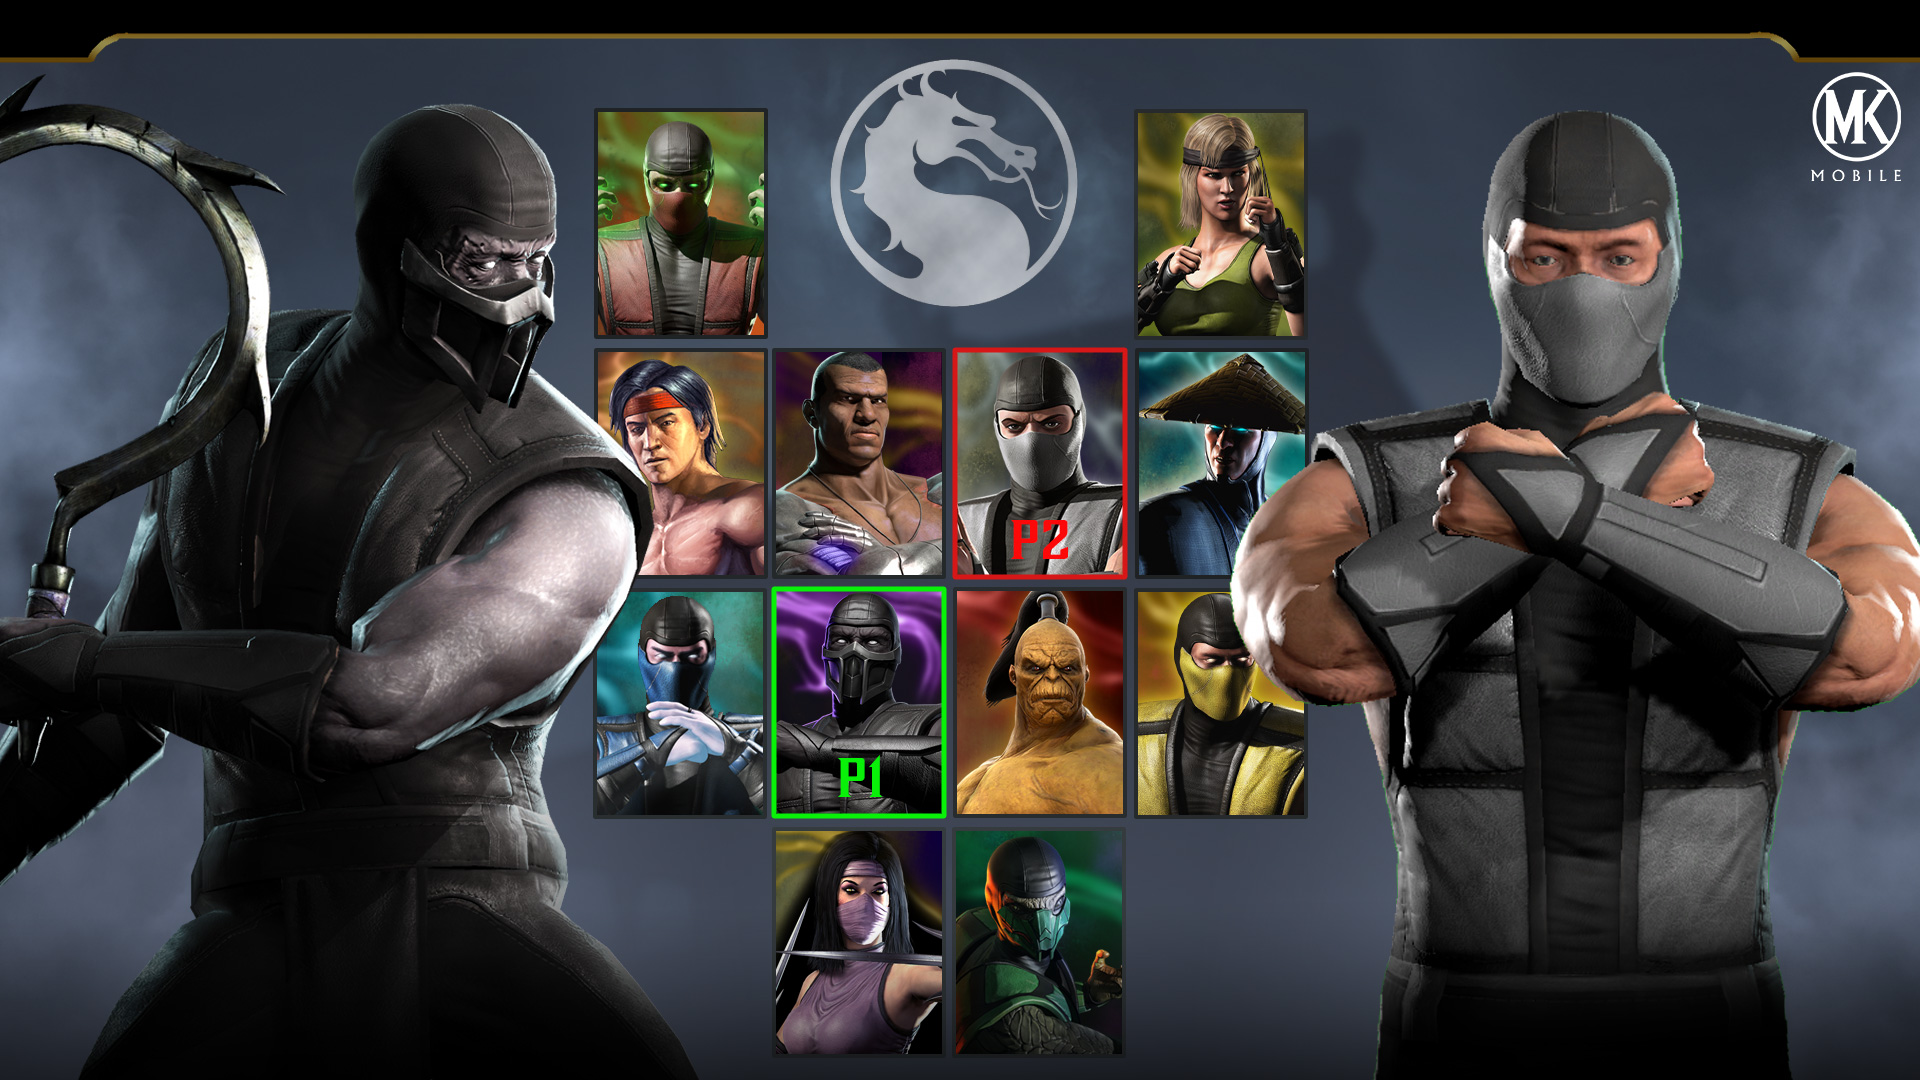 Mortal Kombat 1 (2023) Renders - Mortal Kombat Secrets